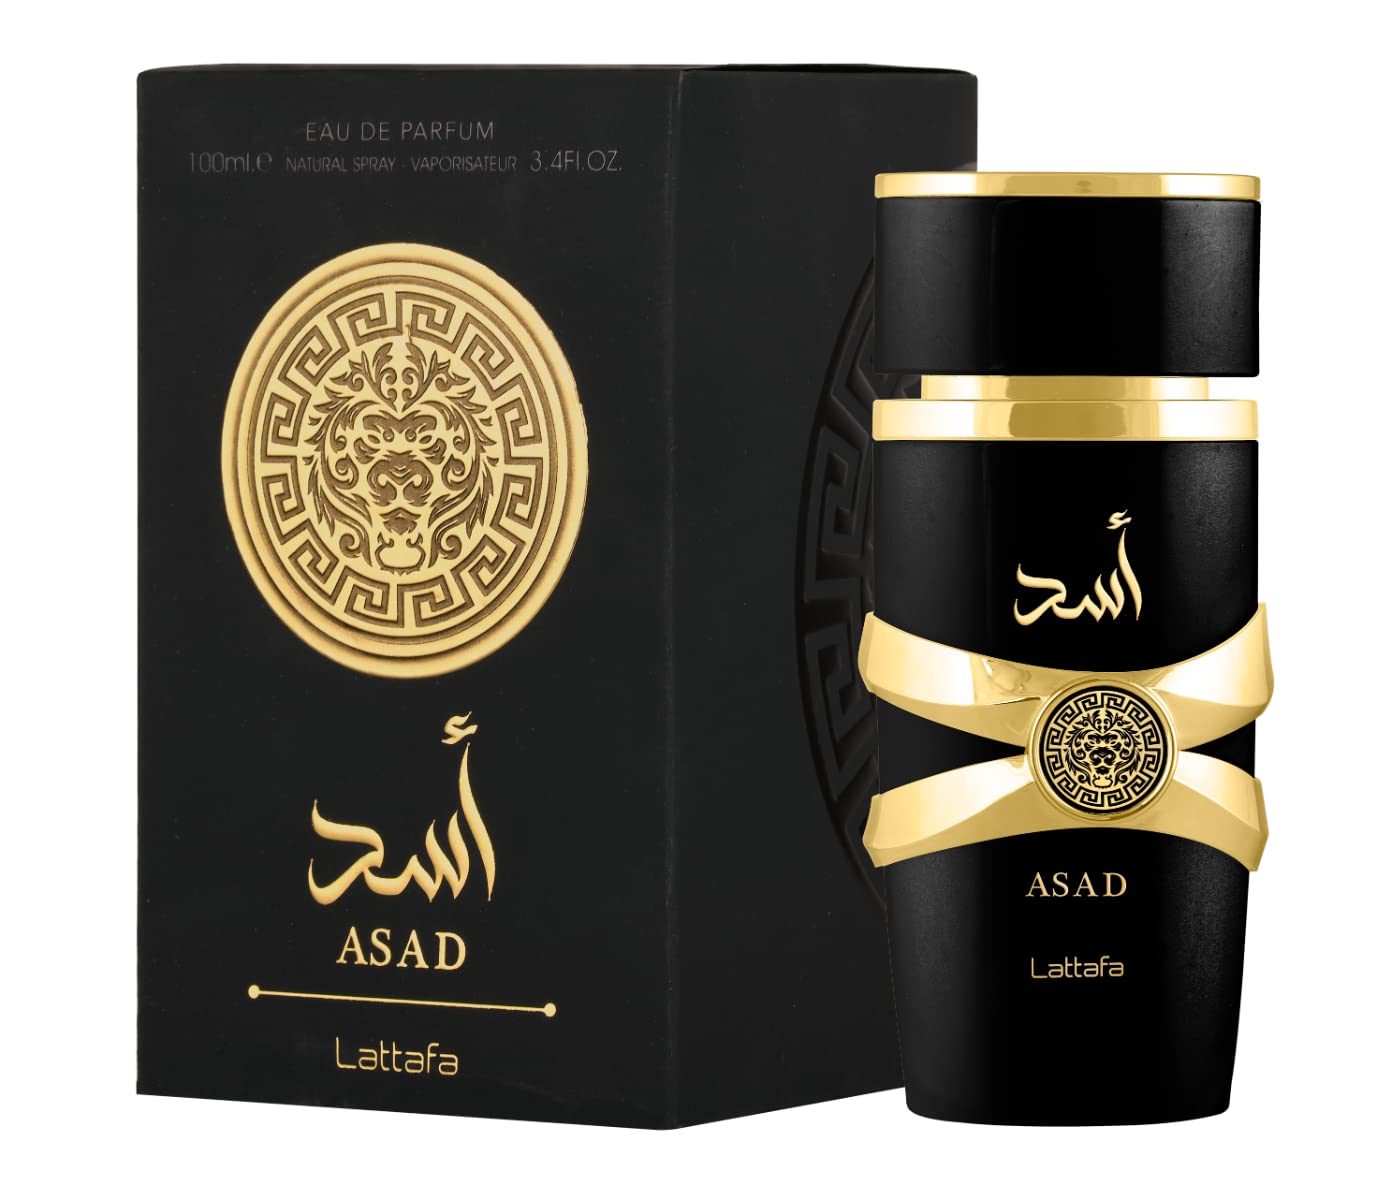 Asad EDP (100ml) spray perfume by Lattafa | Khan El Khalili